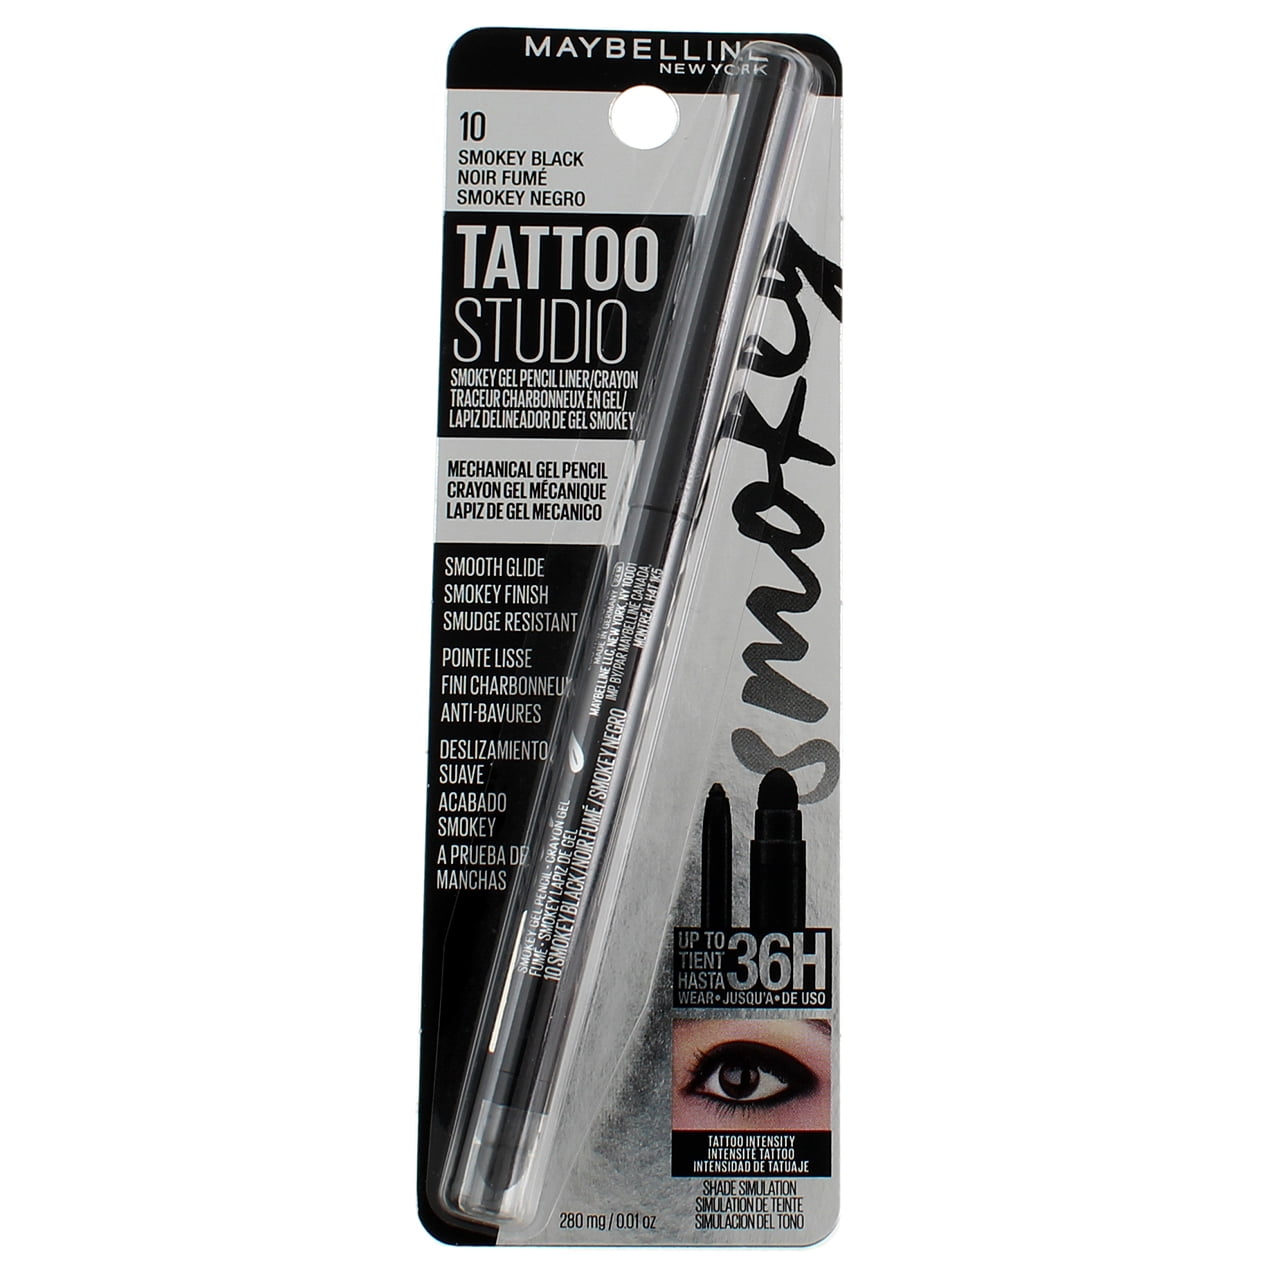 Maybelline TattooStudio Liner Pencil Eyeliner oz, 36hr Blendable 0.01 Matte Black, Oz. Mechanical Smudgeproof Wear Makeup Pencil Waterproof Lasting Gel Finish Smokey Long